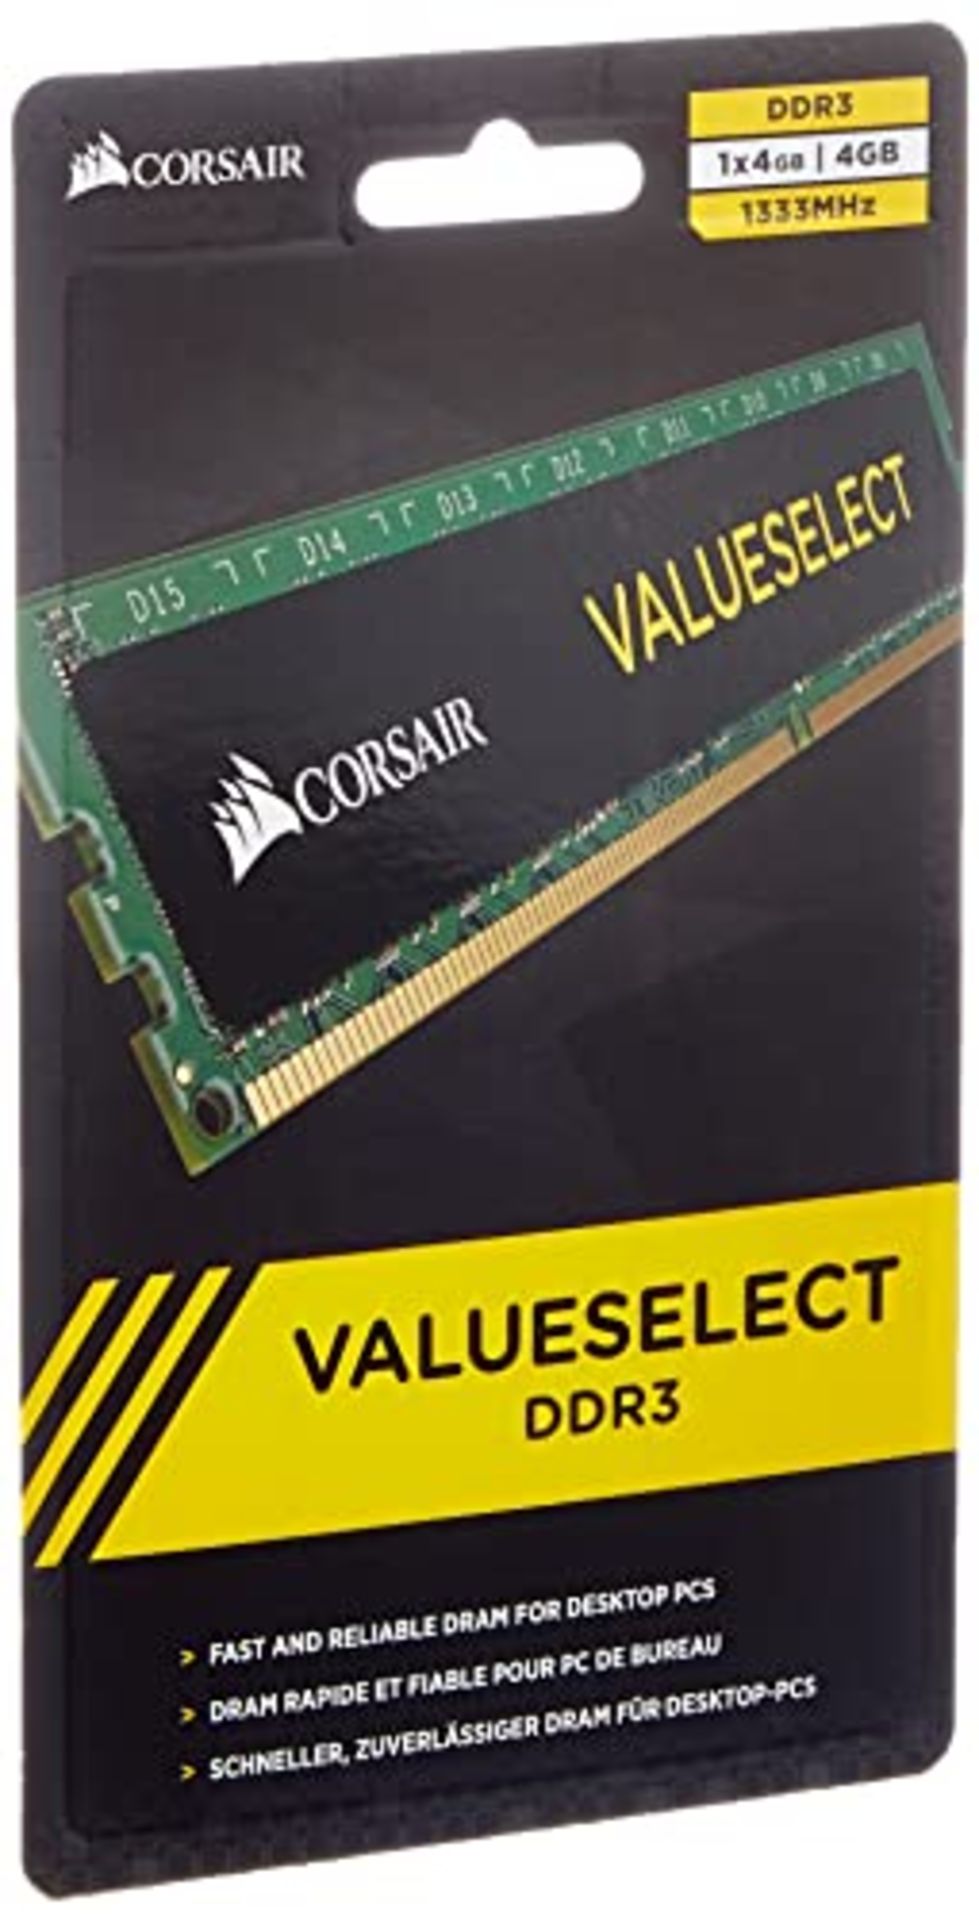 Corsair CMV4GX3M1A1333C9 Value Select 4GB (1x4GB) DDR3 1333 Mhz CL9 Standard desktop m